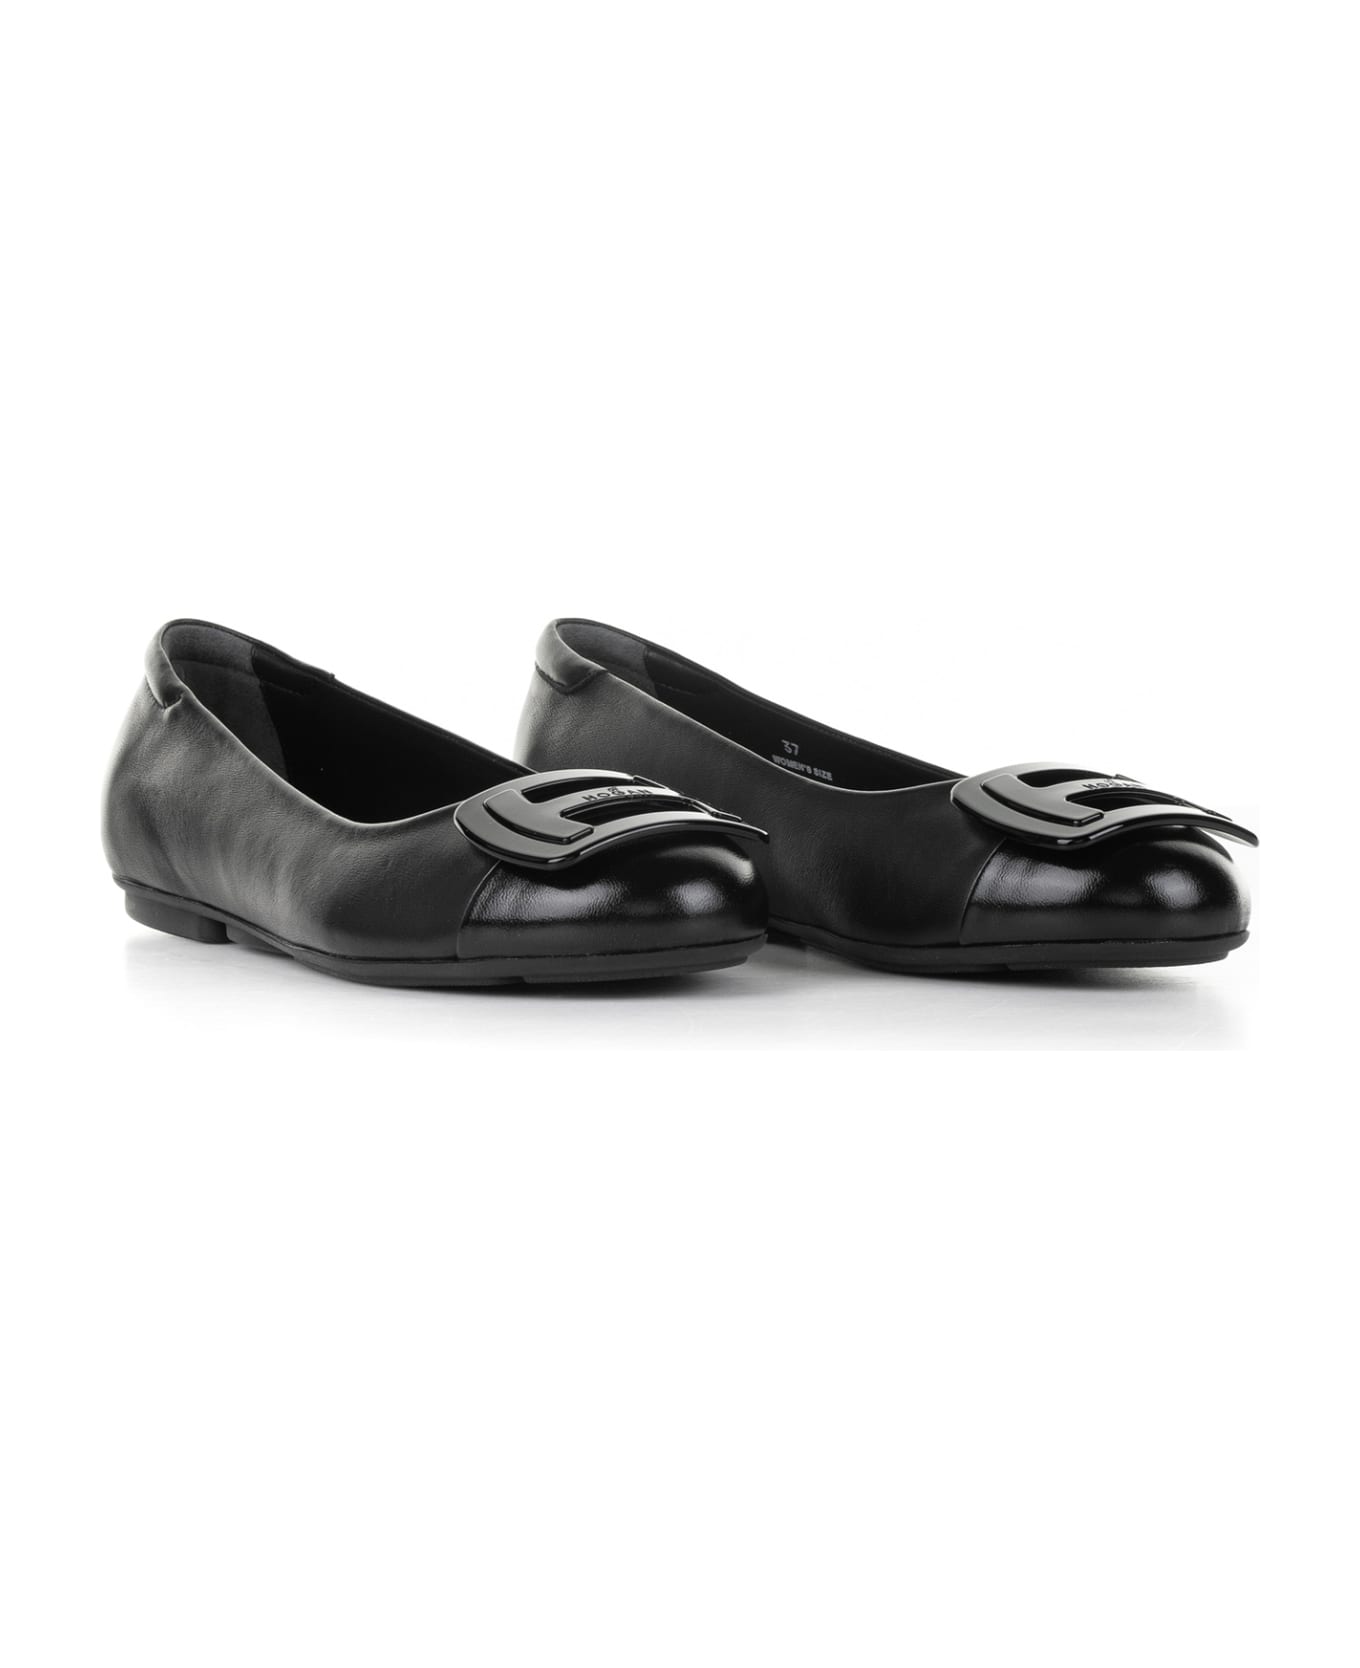 Hogan H661 Patent Leather Ballet Flats - Black